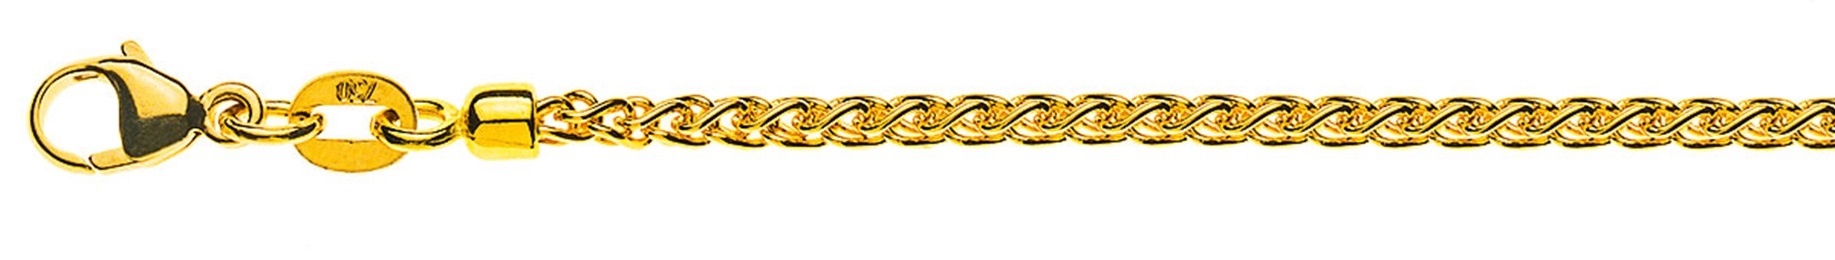 AURONOS Prestige Collier en or jaune 18K torsadé 40cm 2.15mm